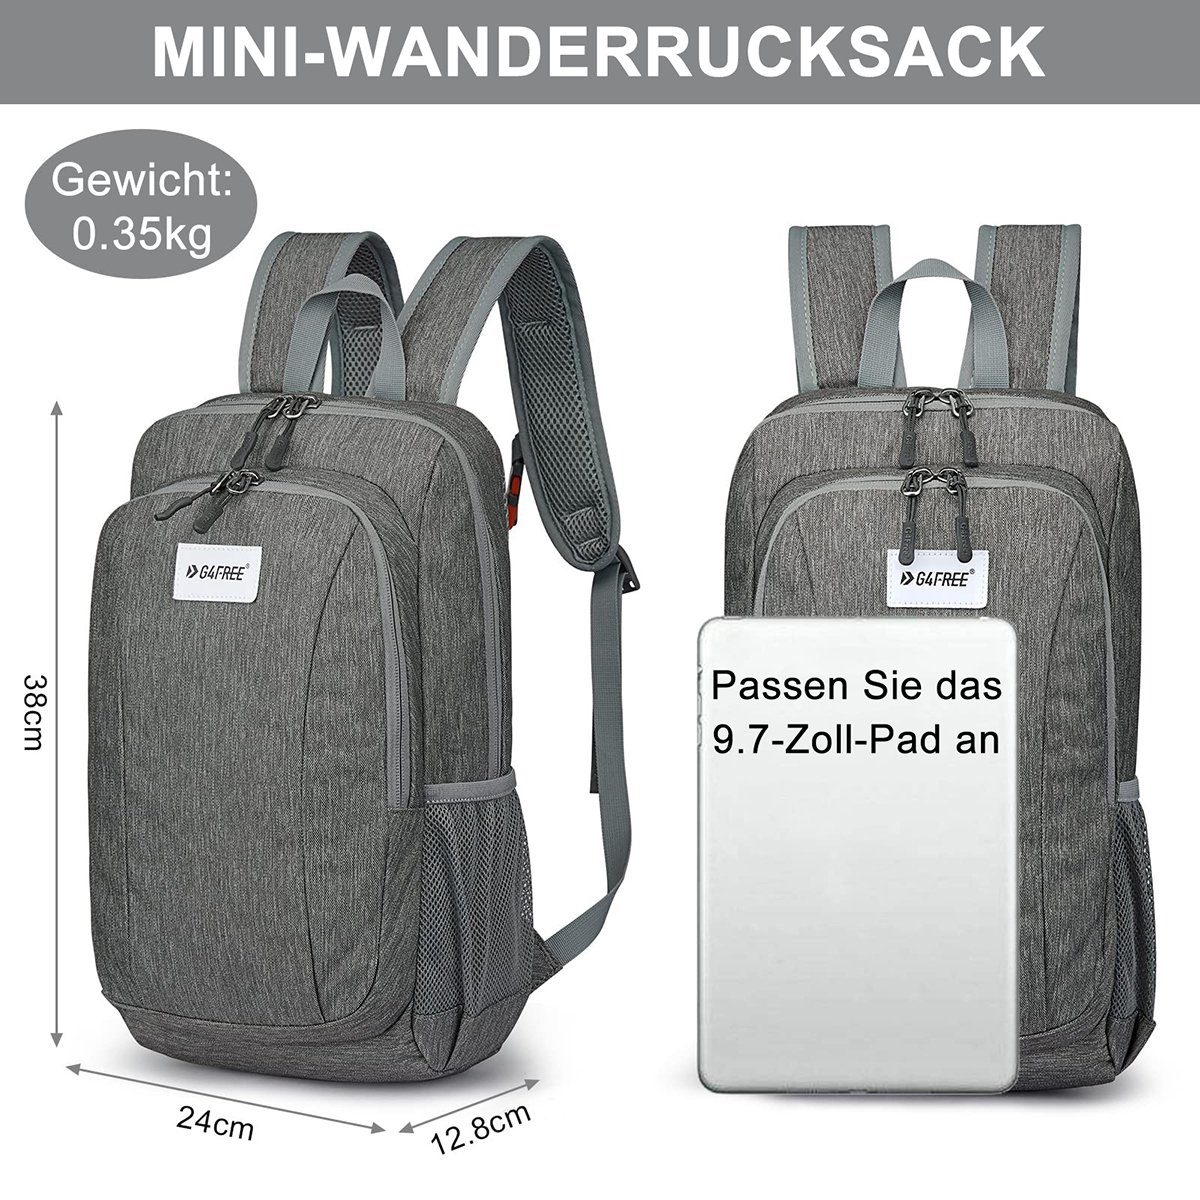 Reiserucksack Tages- Wanderrucksack, Grau G4Free Schul- Mini-Wanderrucksack